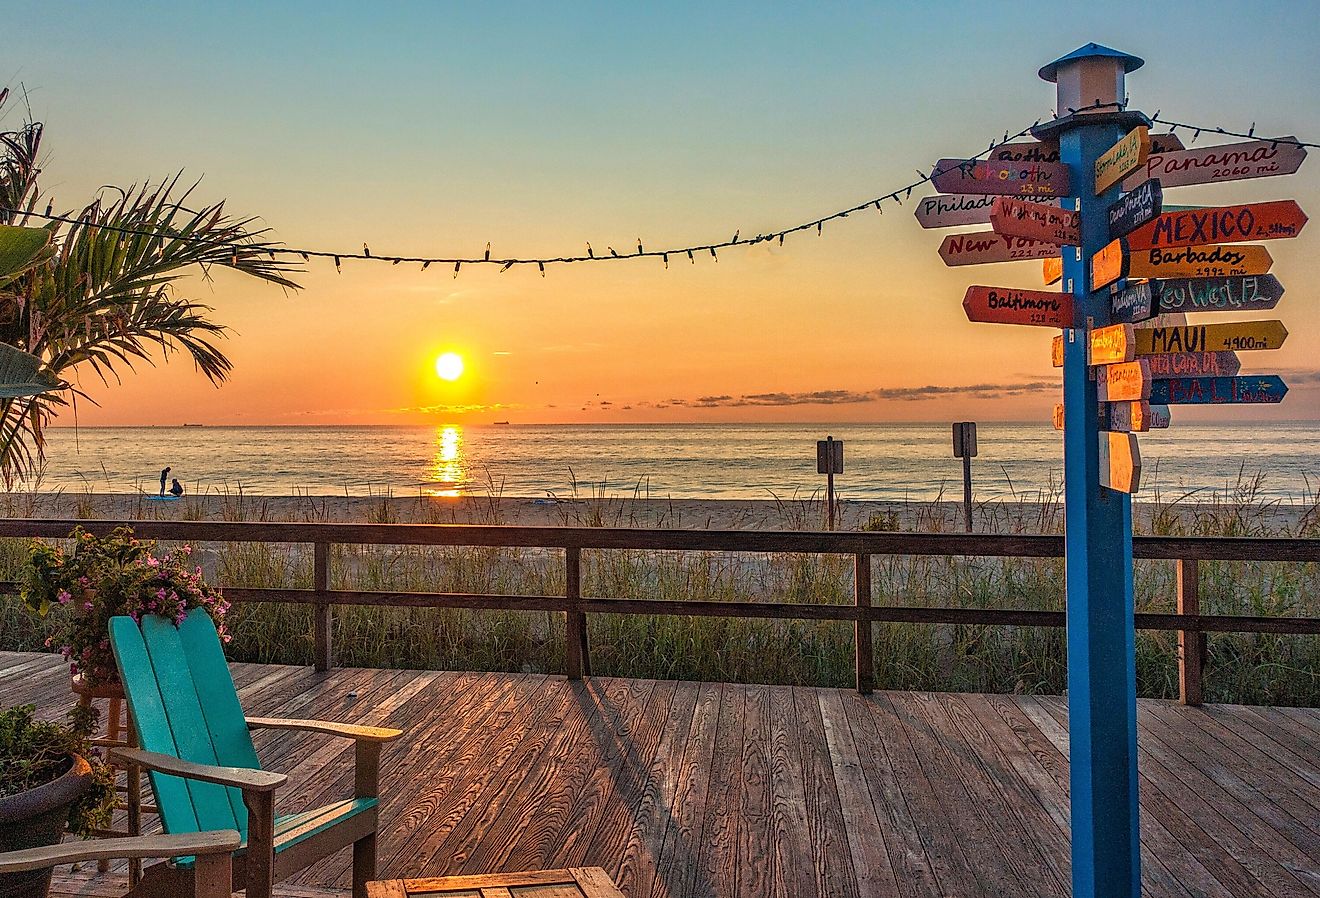 Where to sign on Bethany Beach boardwalk, Delaware. Image credit AZN Media via Shutterstock.